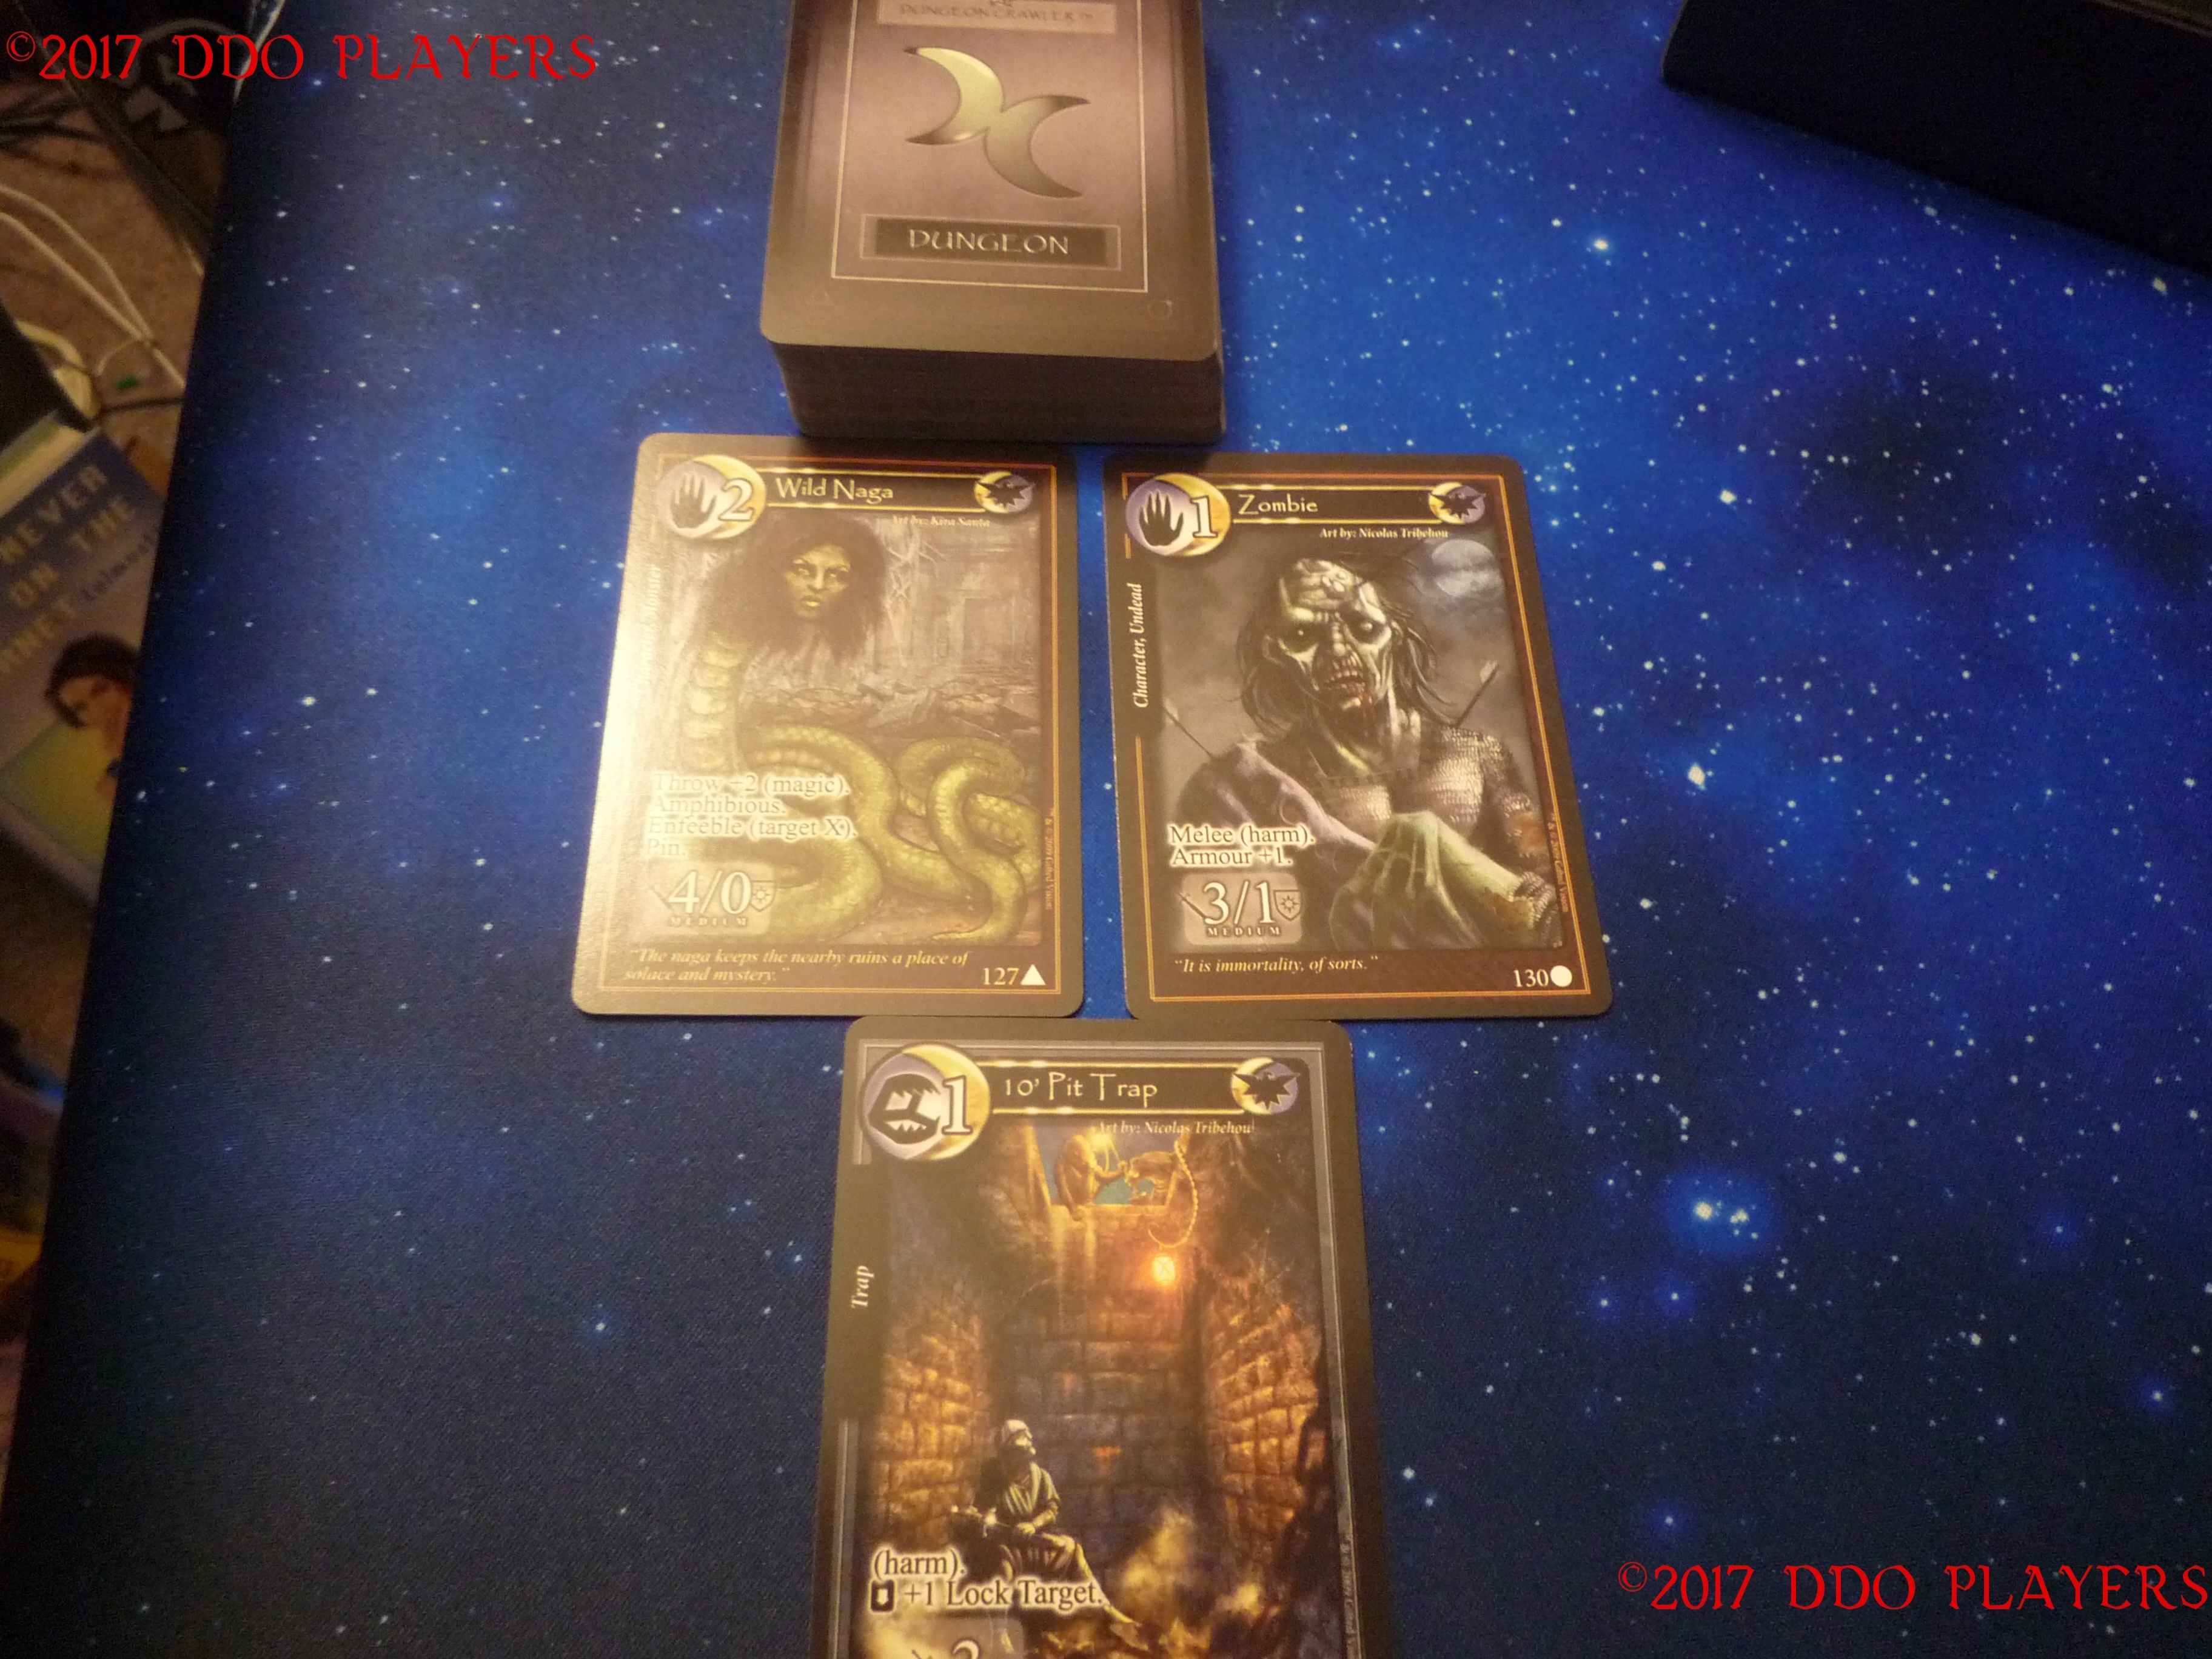 Bardcard - A Card Matching Dungeon Crawler > 1.99 : r/iosgaming